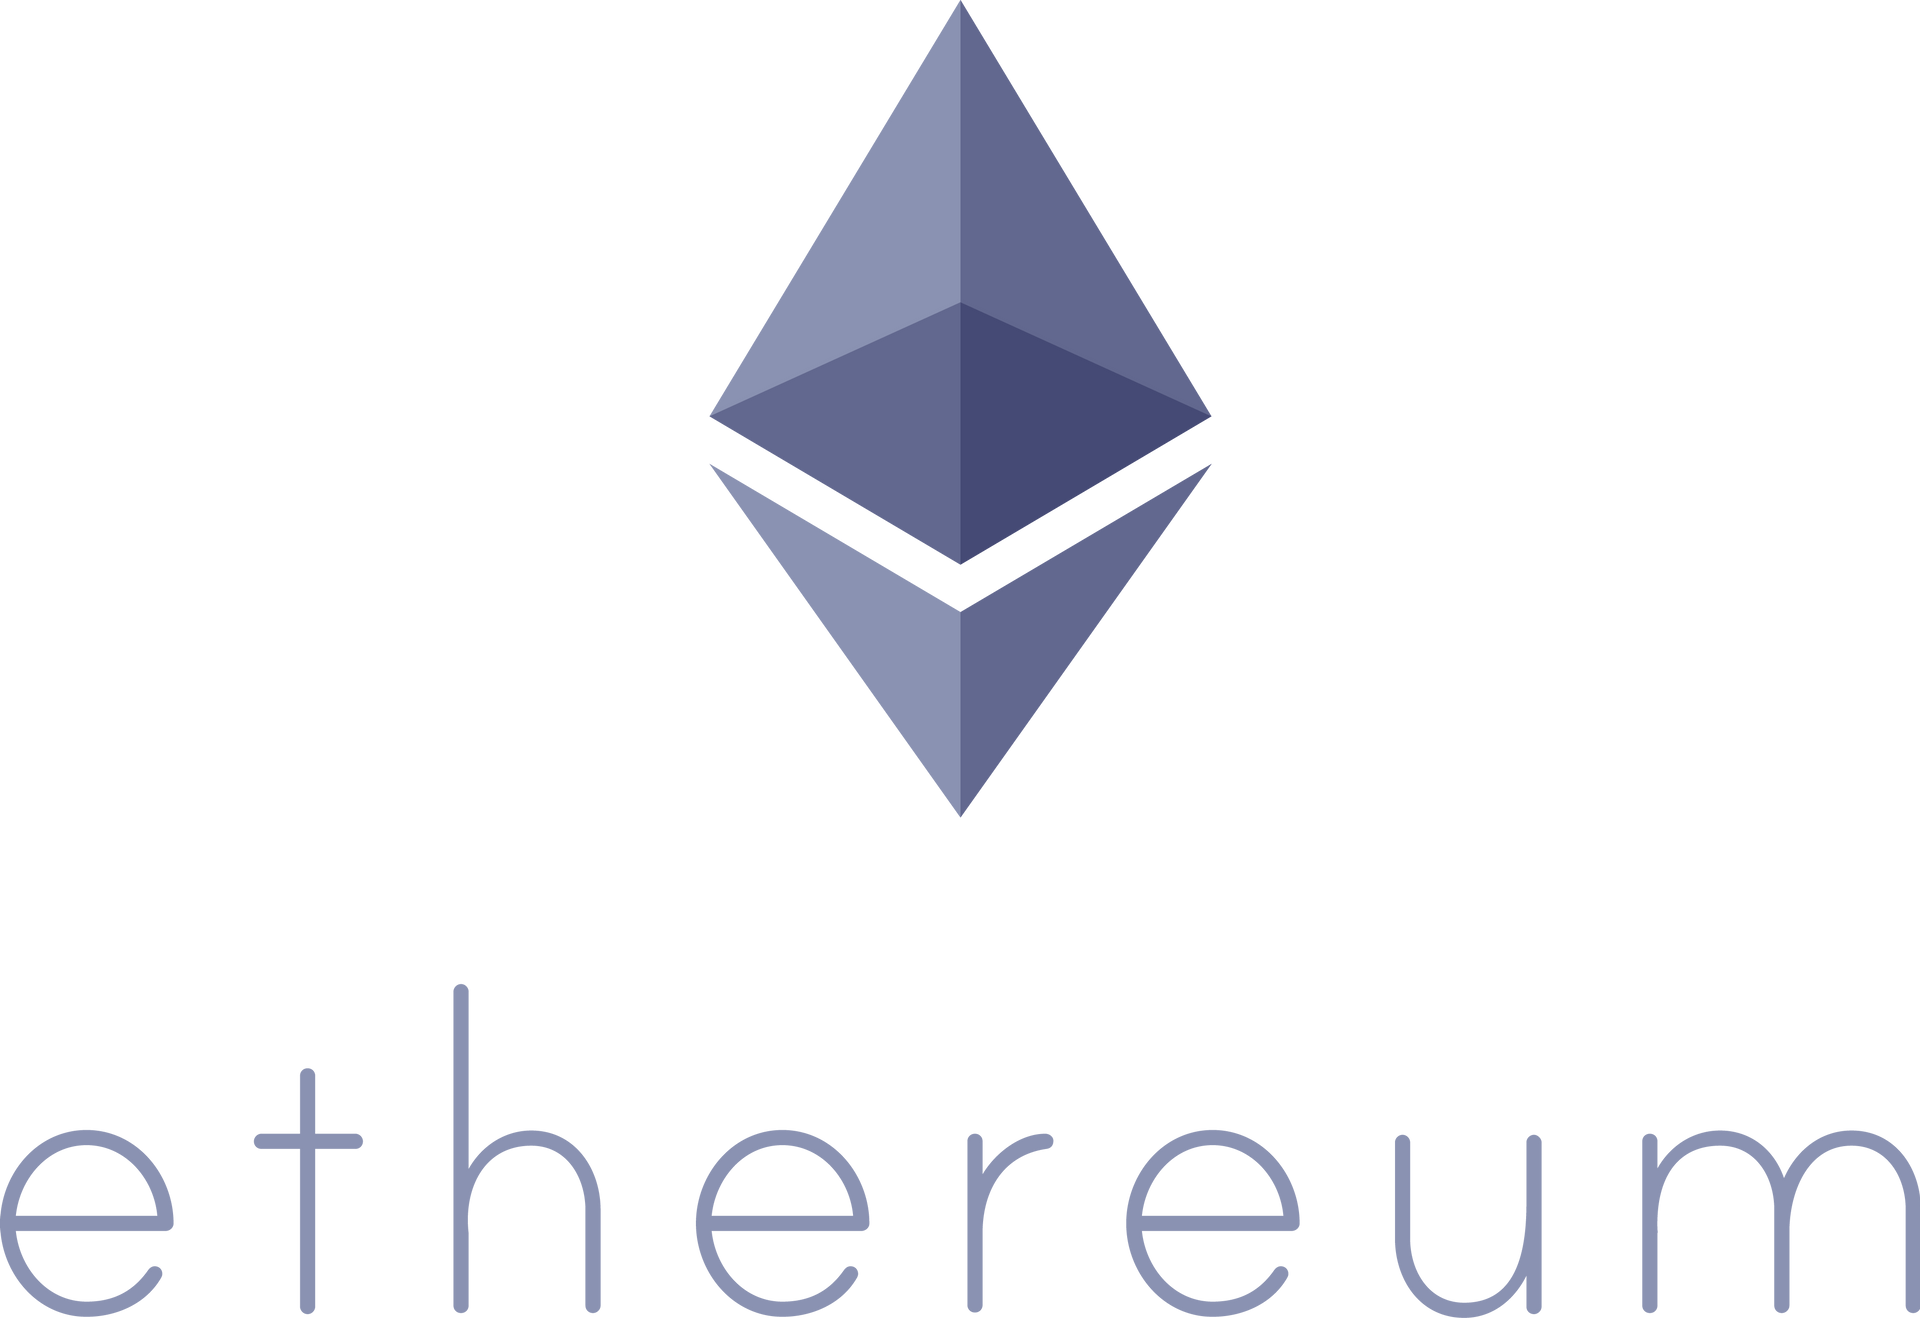 ETH logo portrait (purple)